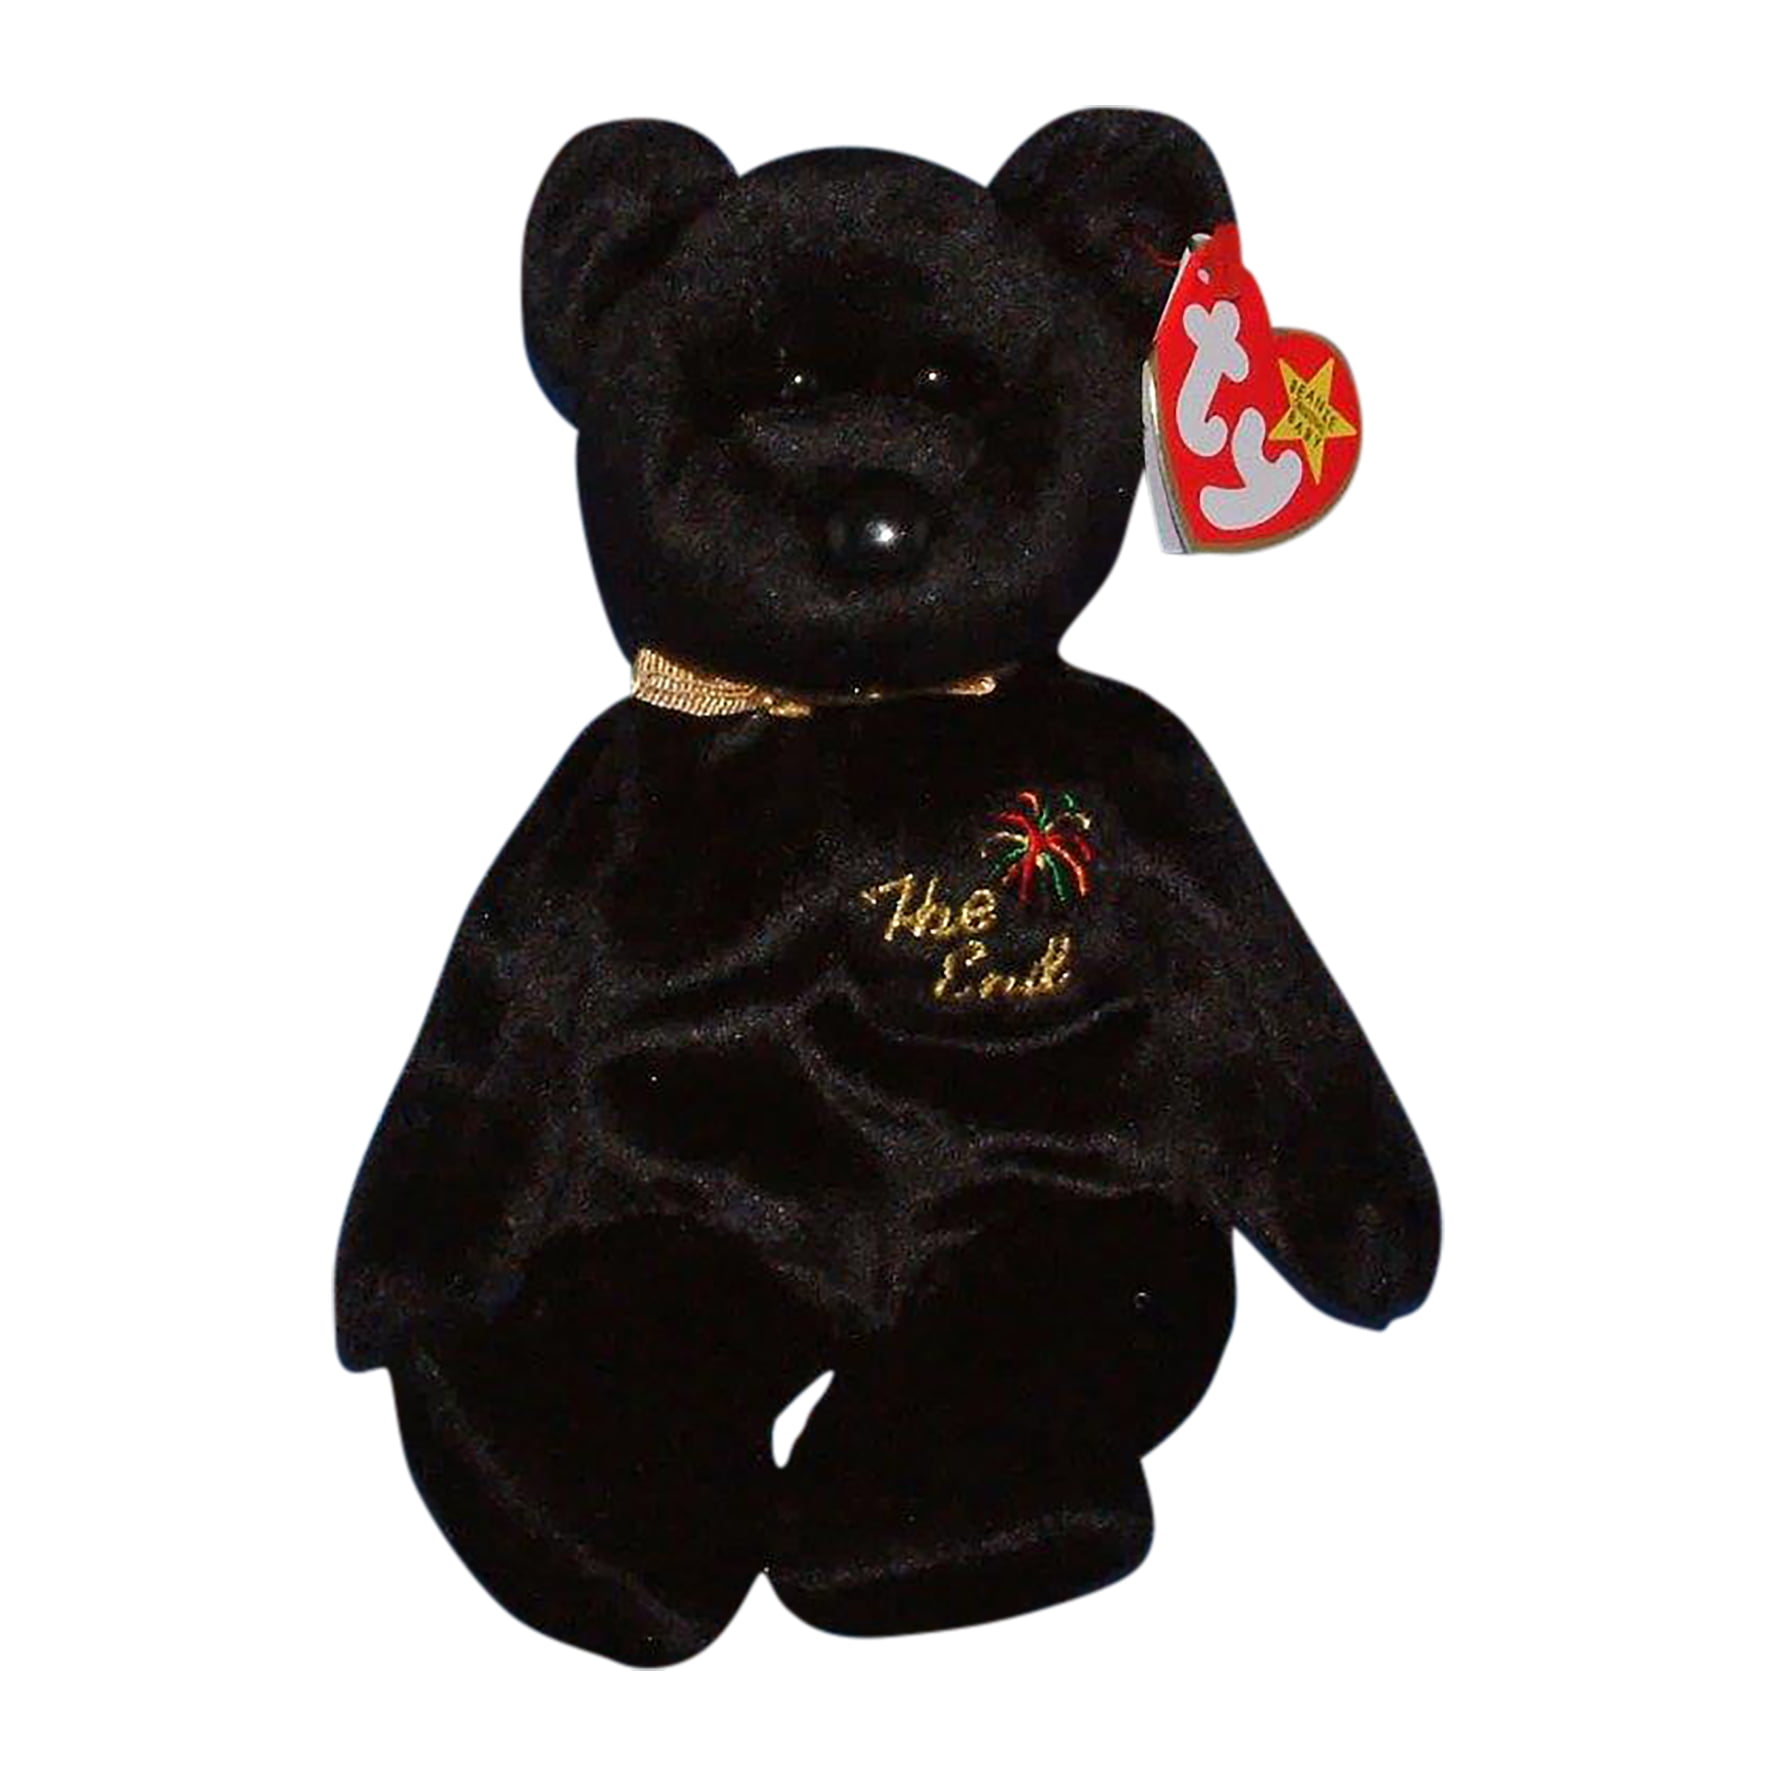 Ty Beanie Baby The End Bear Stuffed Animal MWMT's